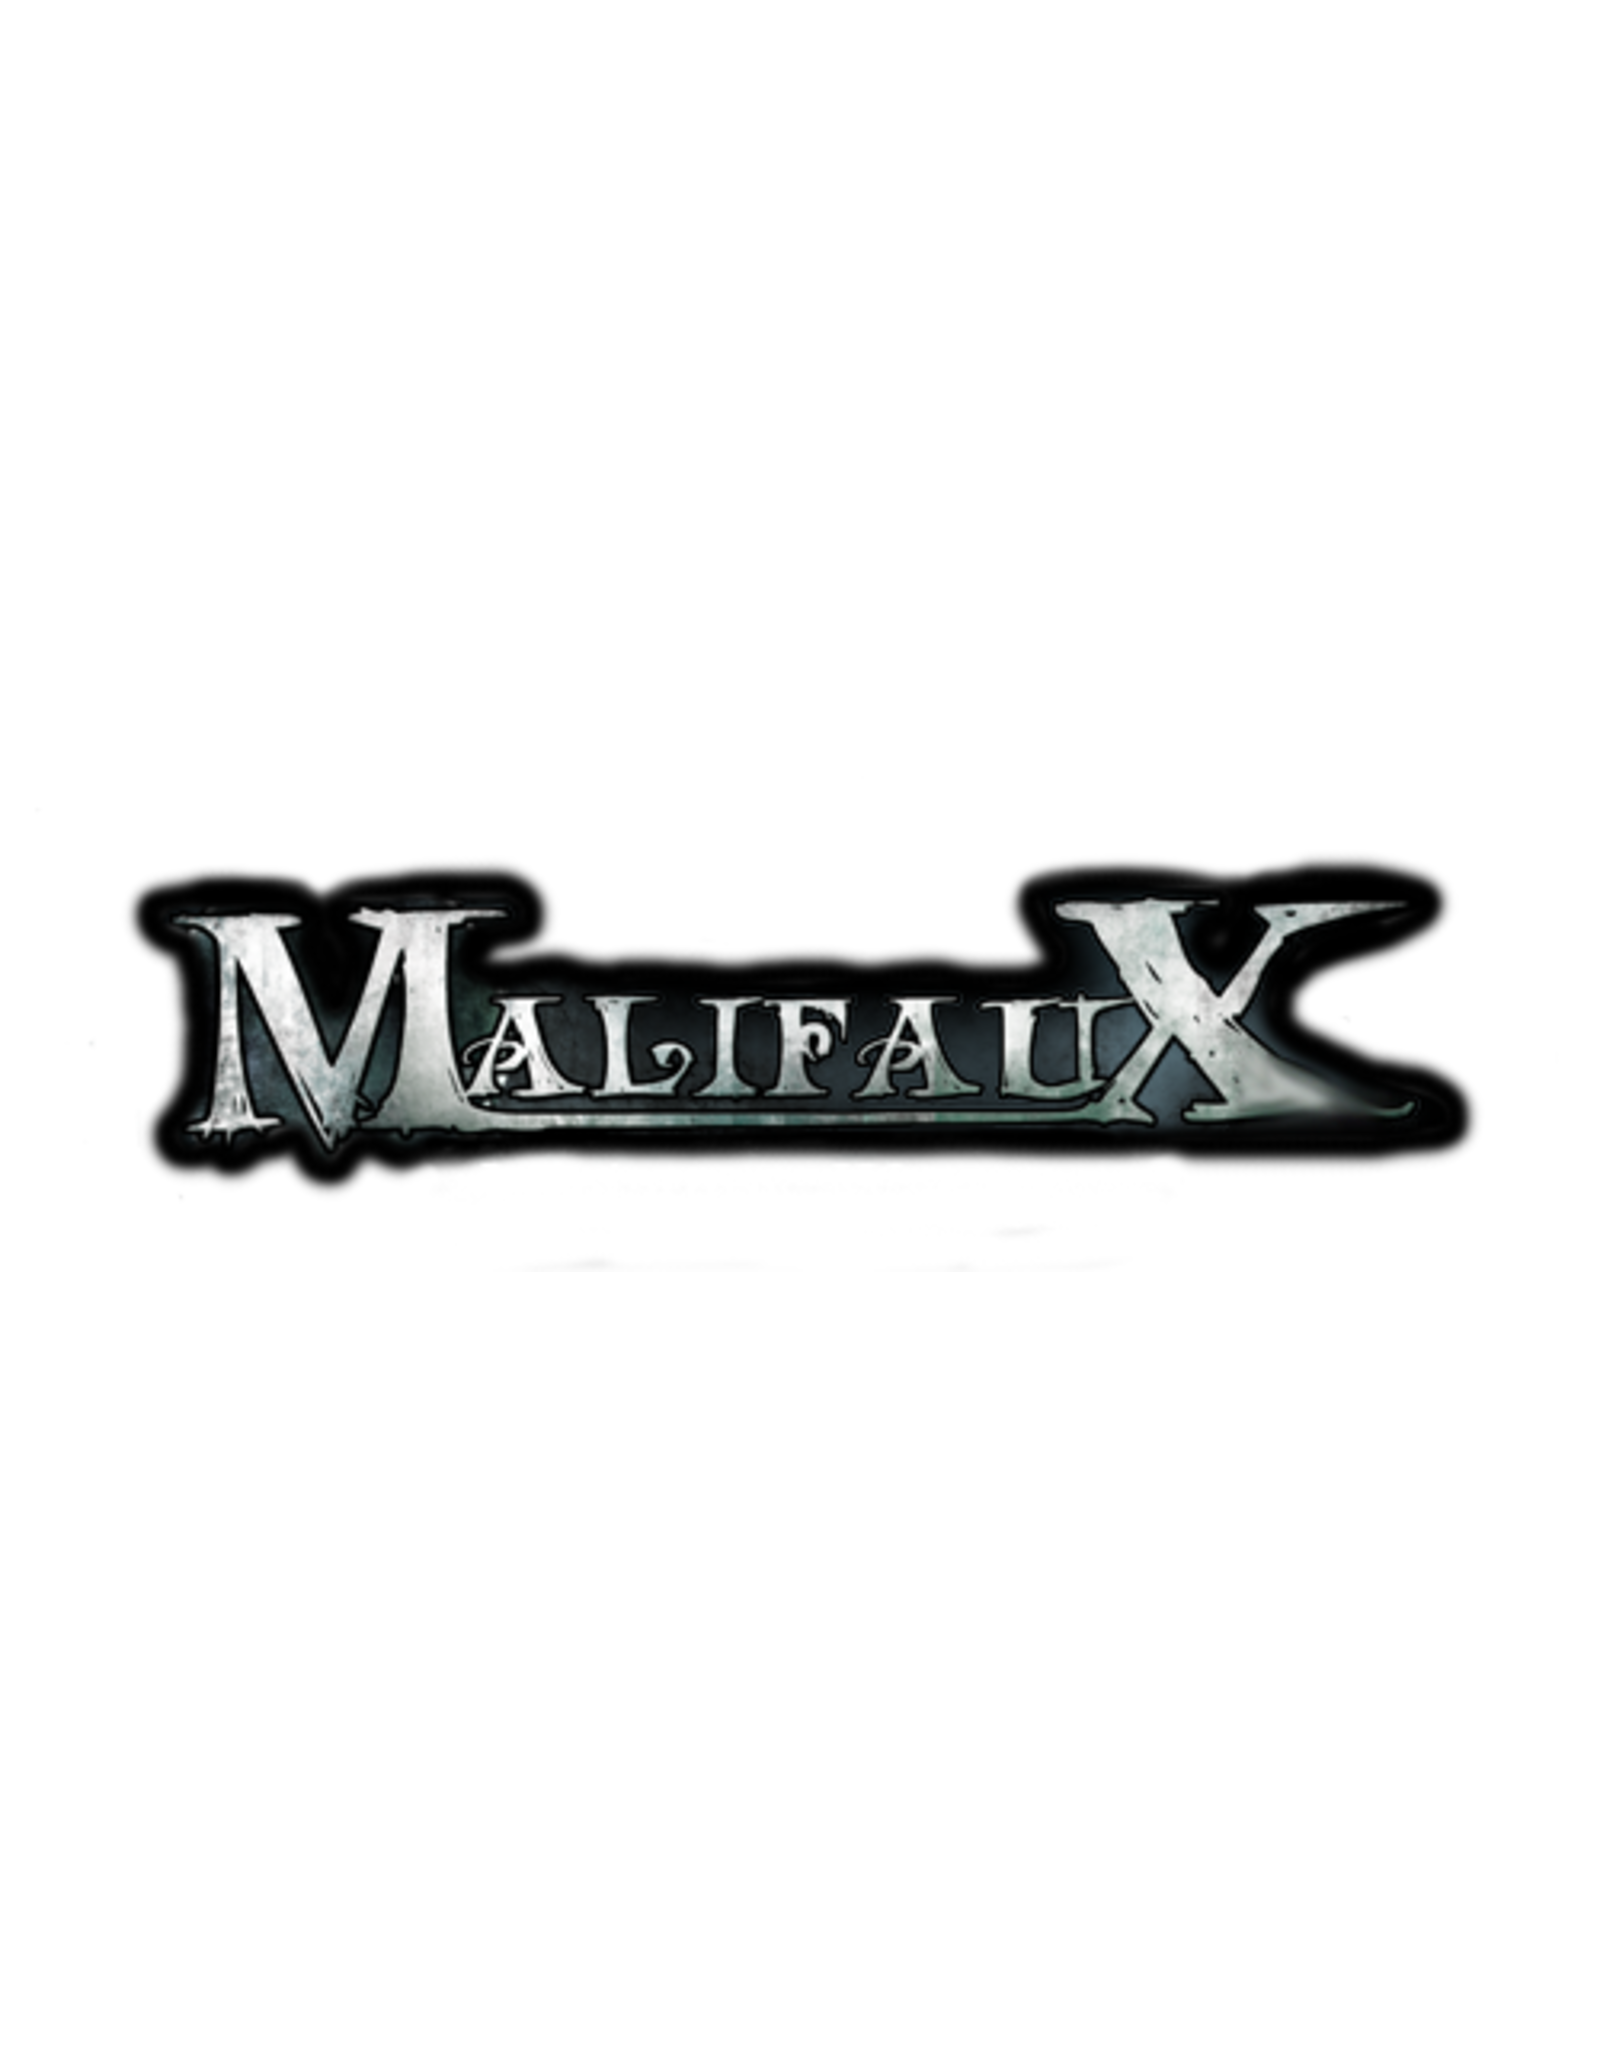 Malifaux League S4